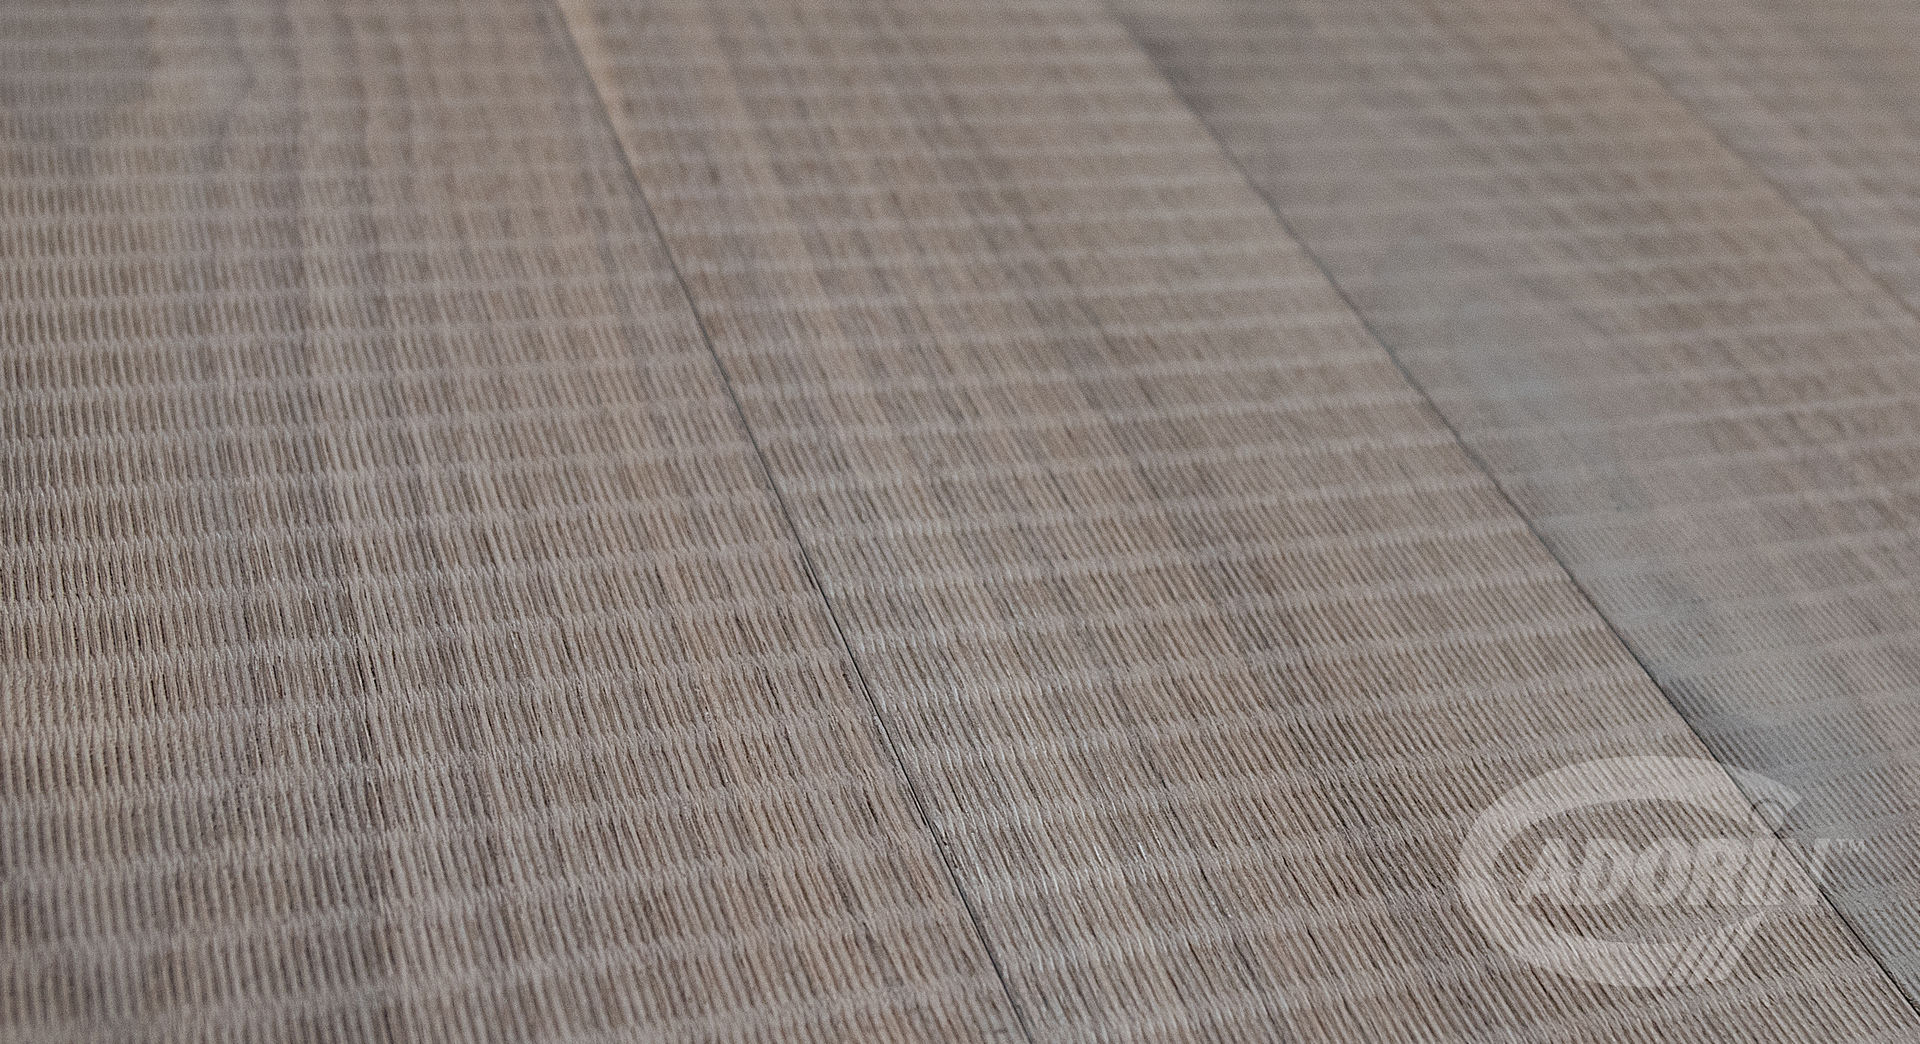 Tatami - Walnut Cadorin Group Srl - Italian craftsmanship production Wood flooring and Coverings Floors Wood Wood effect